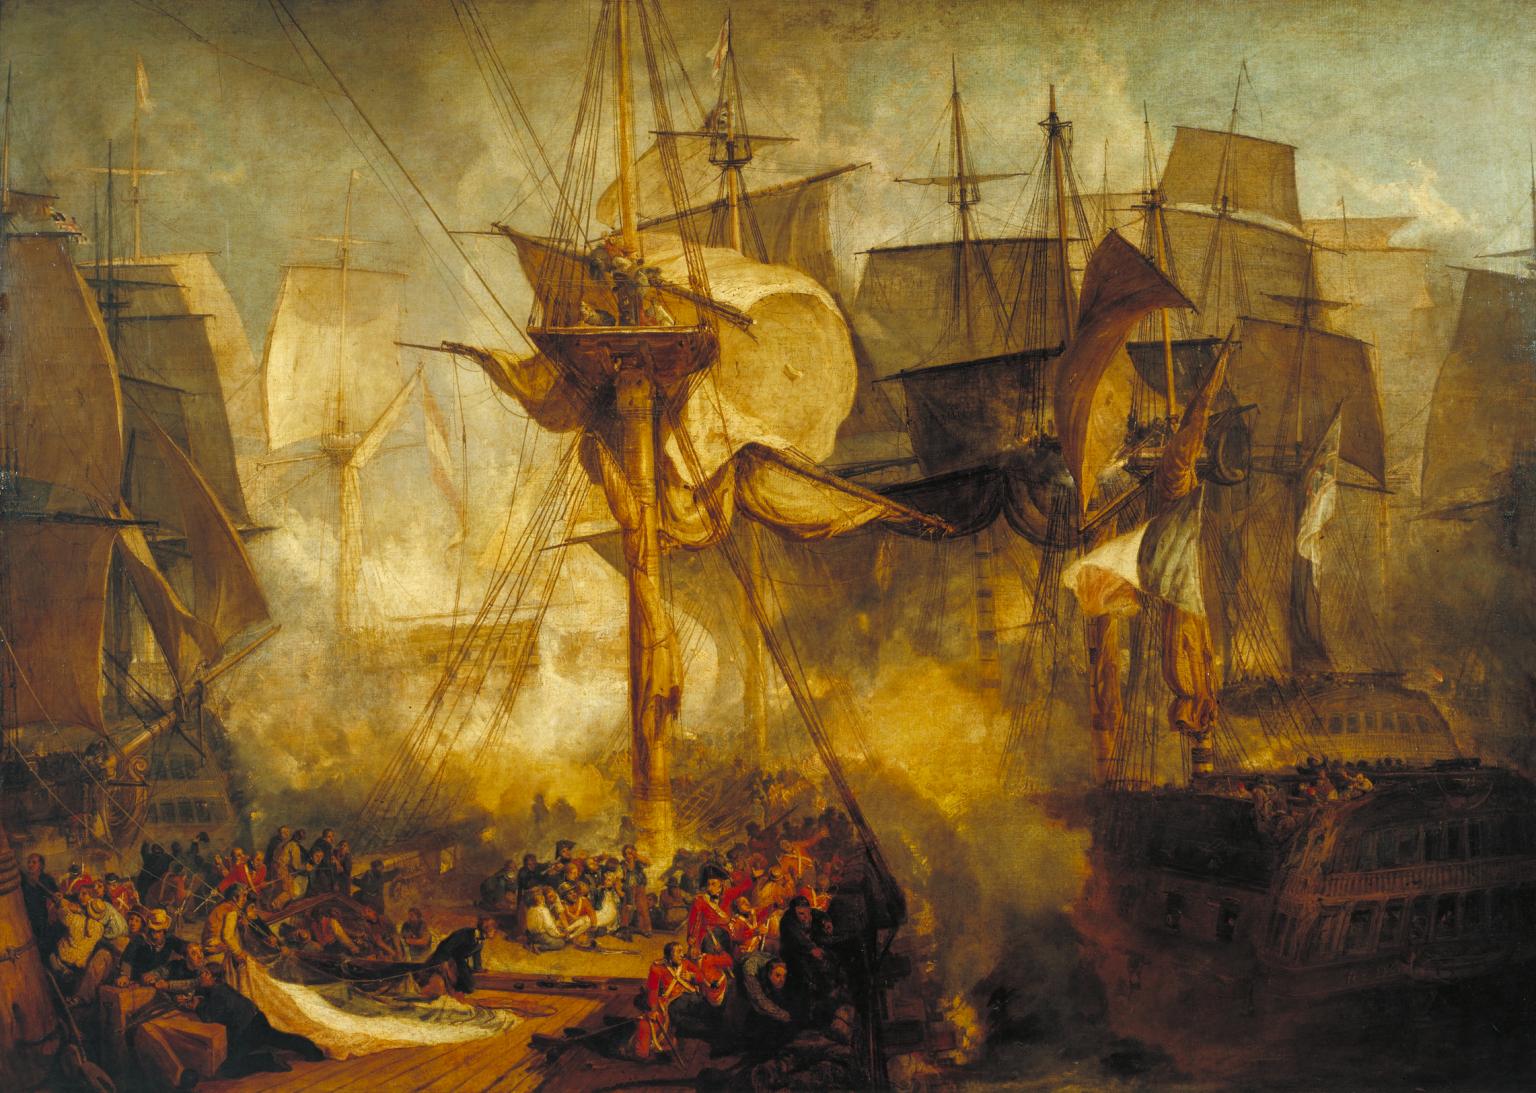 Turner%2C_The_Battle_of_Trafalgar_%281806%29.jpg